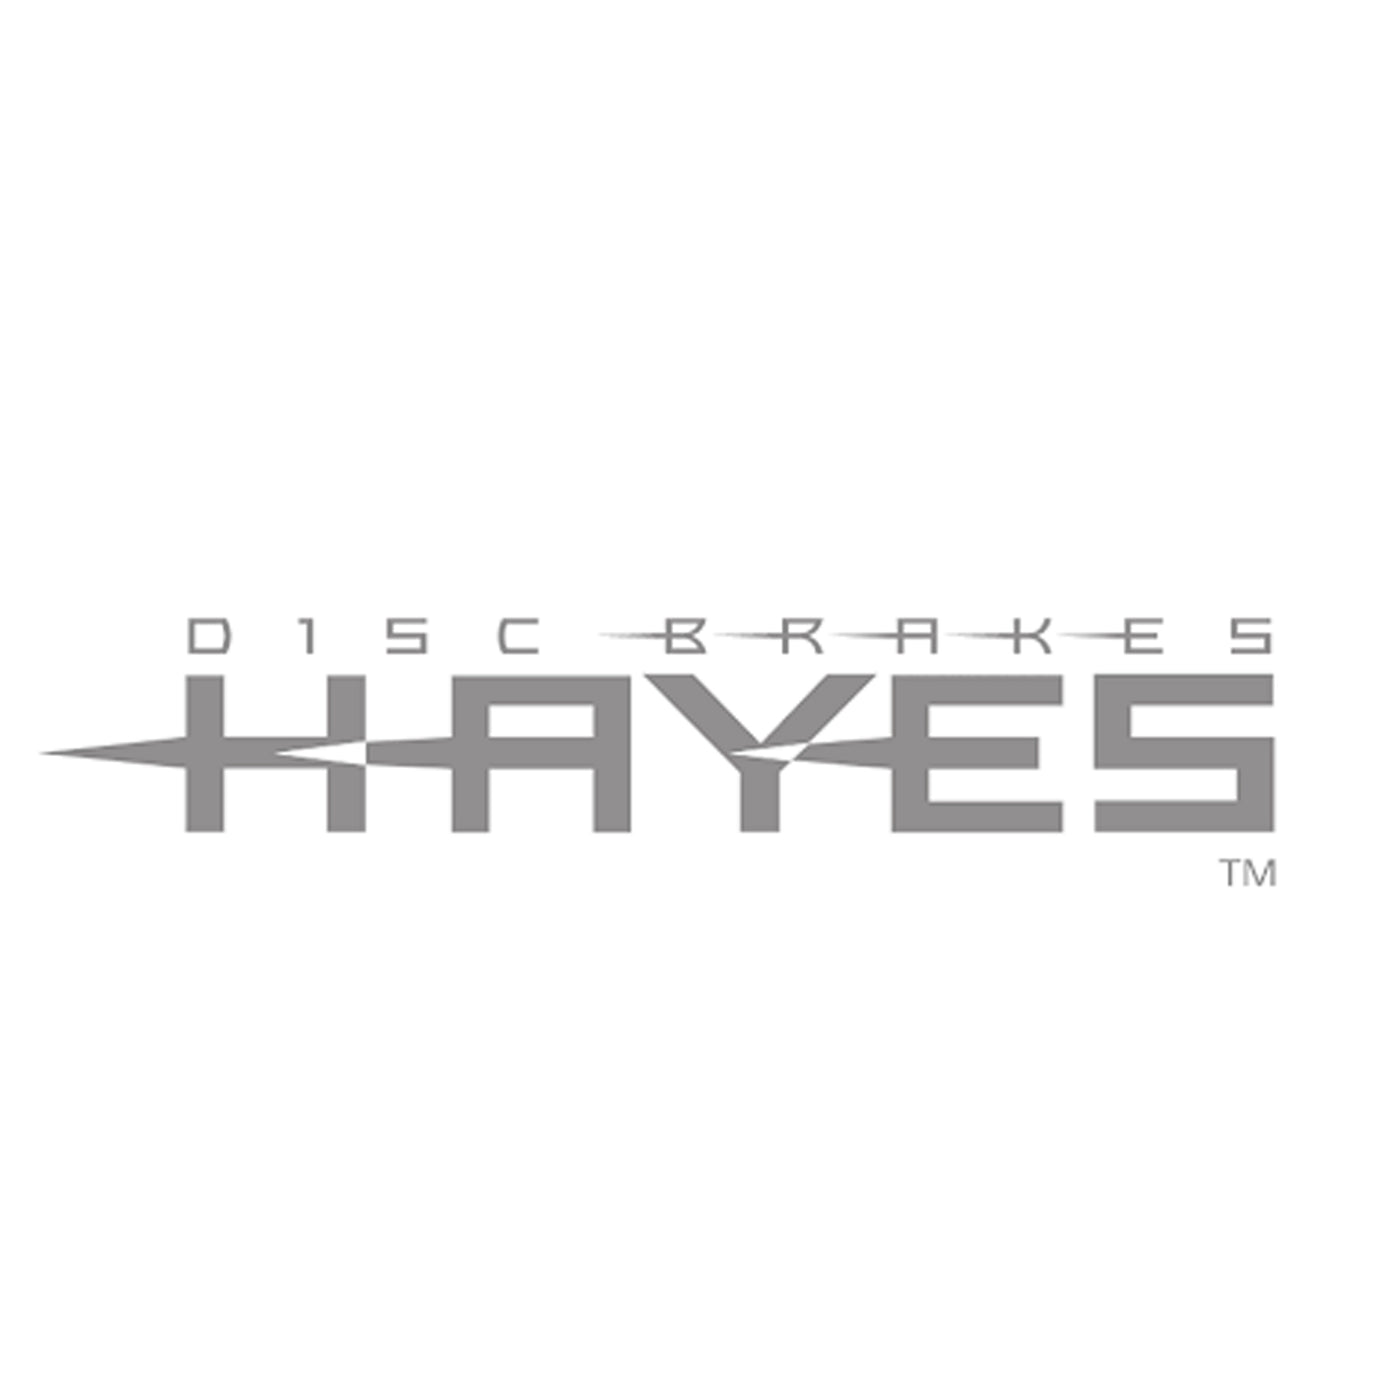 Hayes Dominion Brake Rebuild Parts